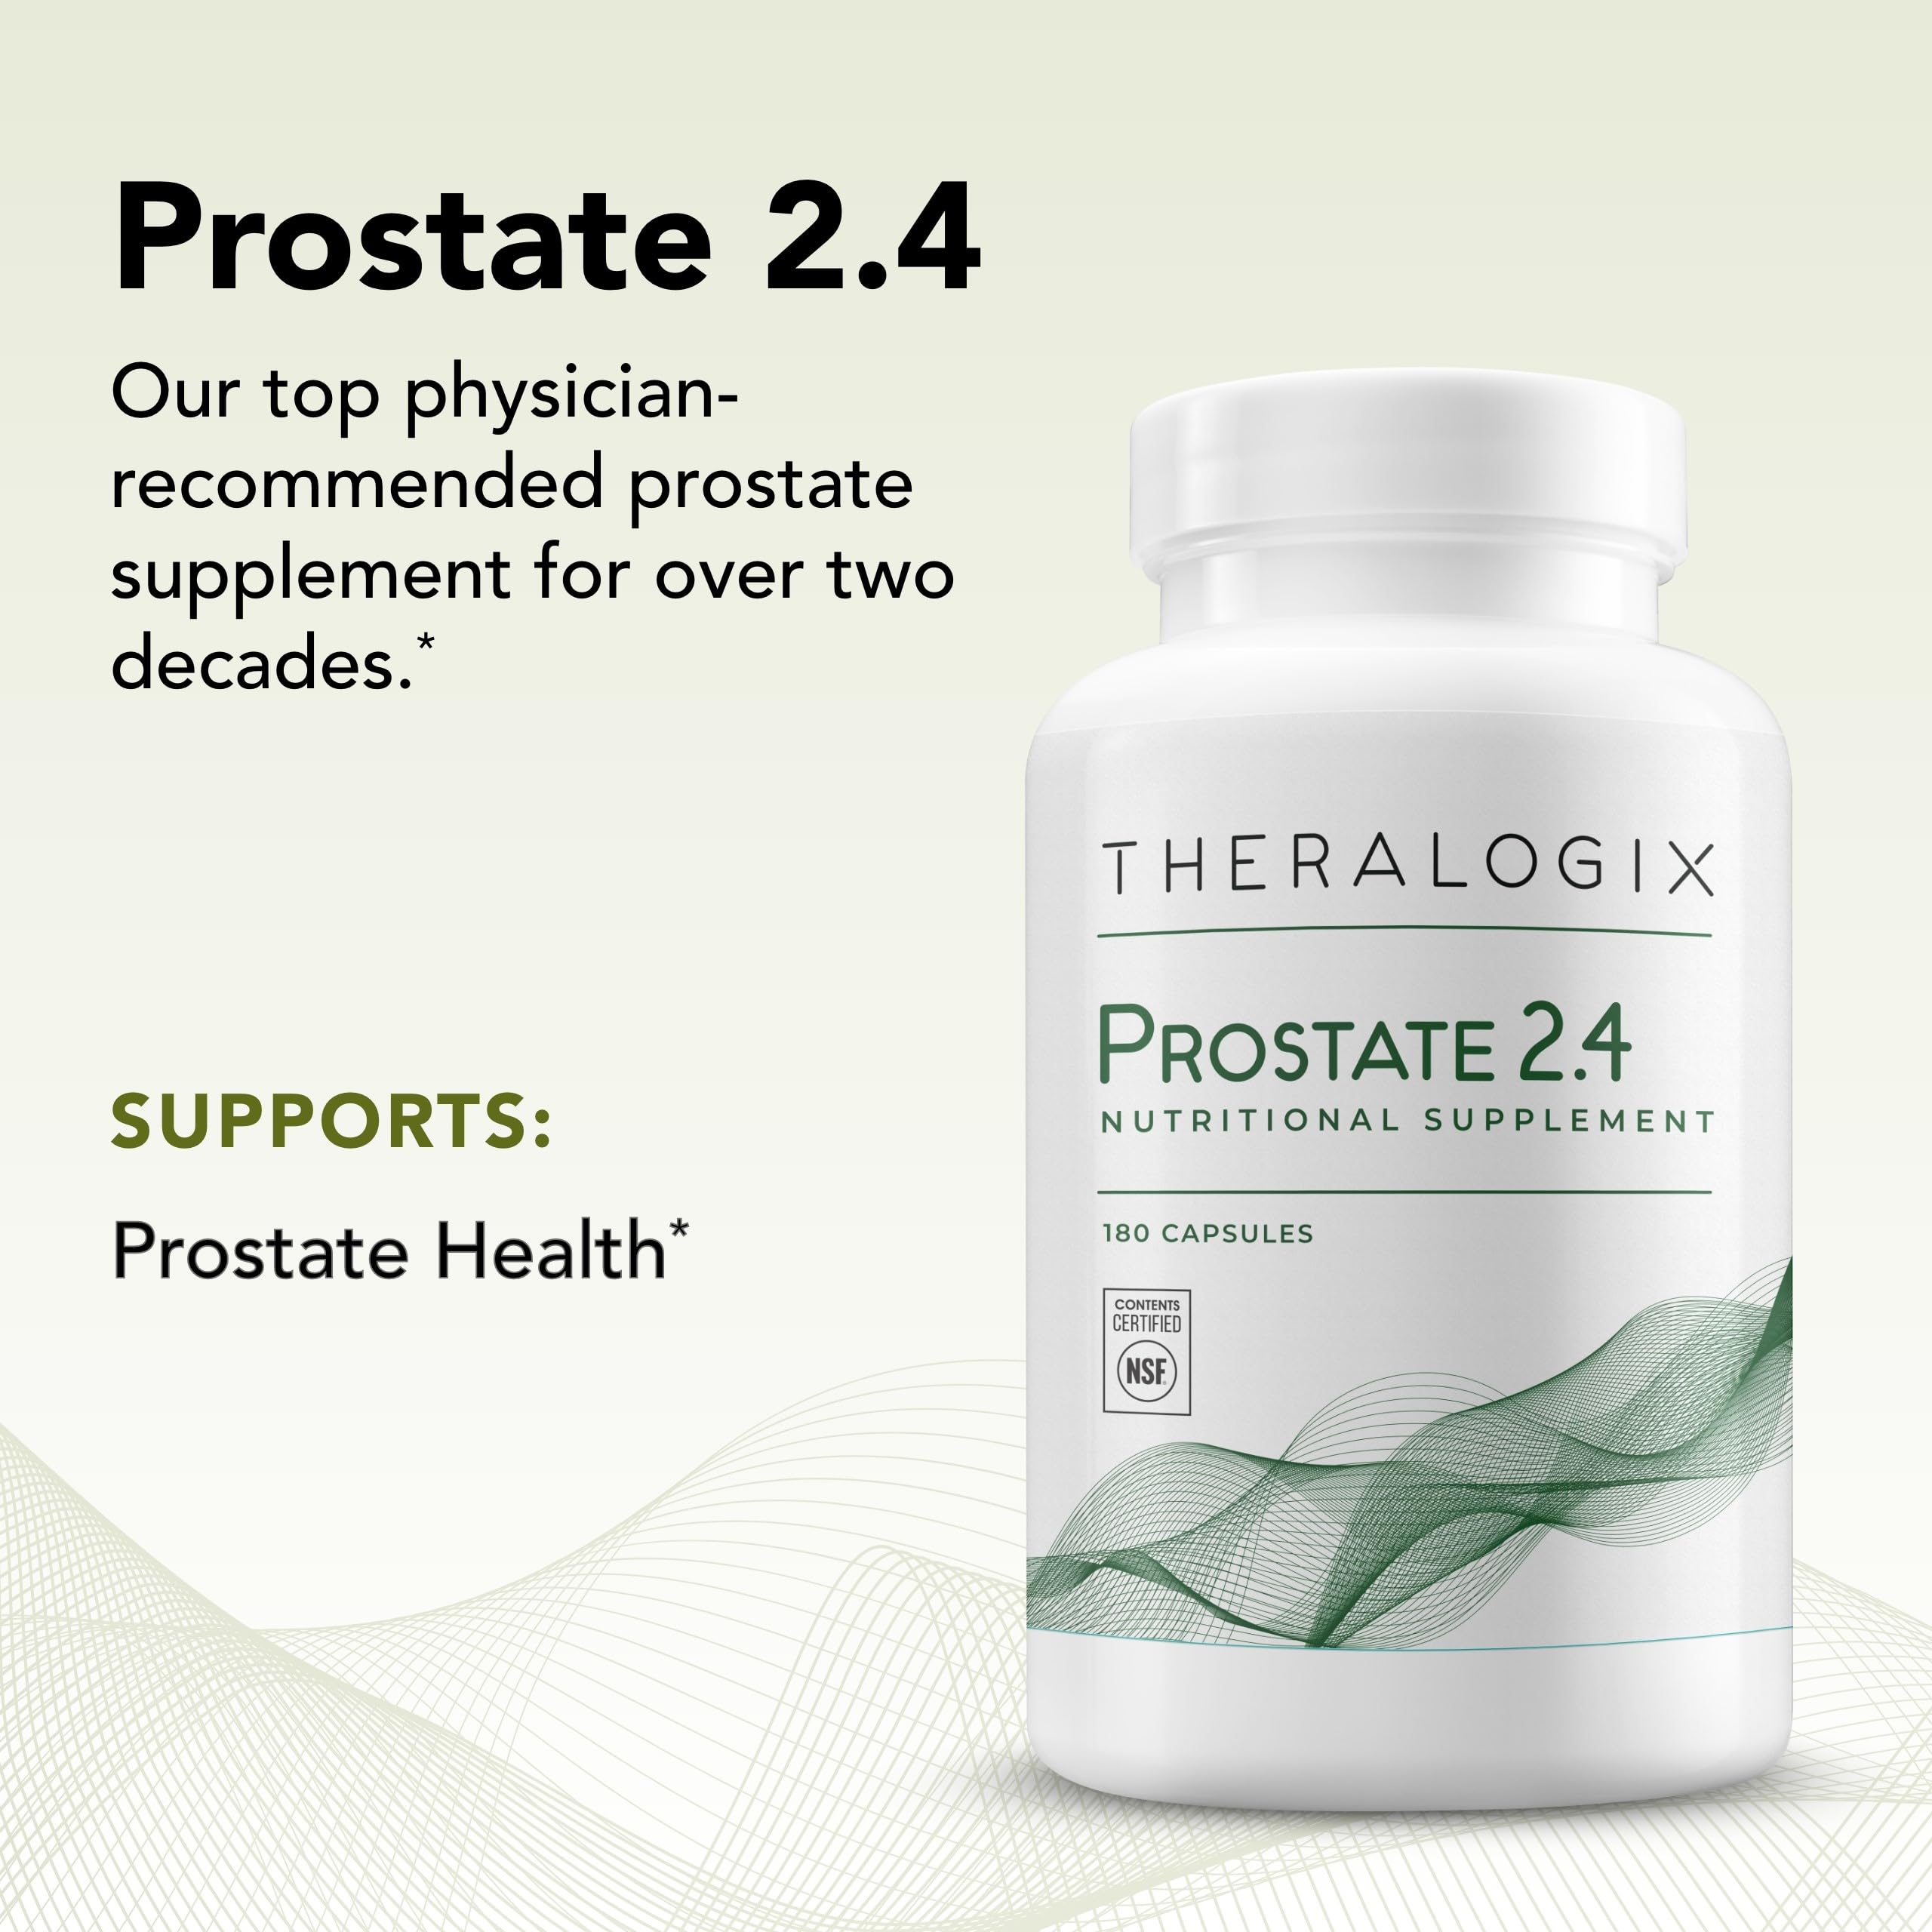 Theralogix Prostate SR + Prostate 2.4 Bundle - Saw Palmetto Supplement & Prostate Tissue Health Supplement (90 Day Supply)